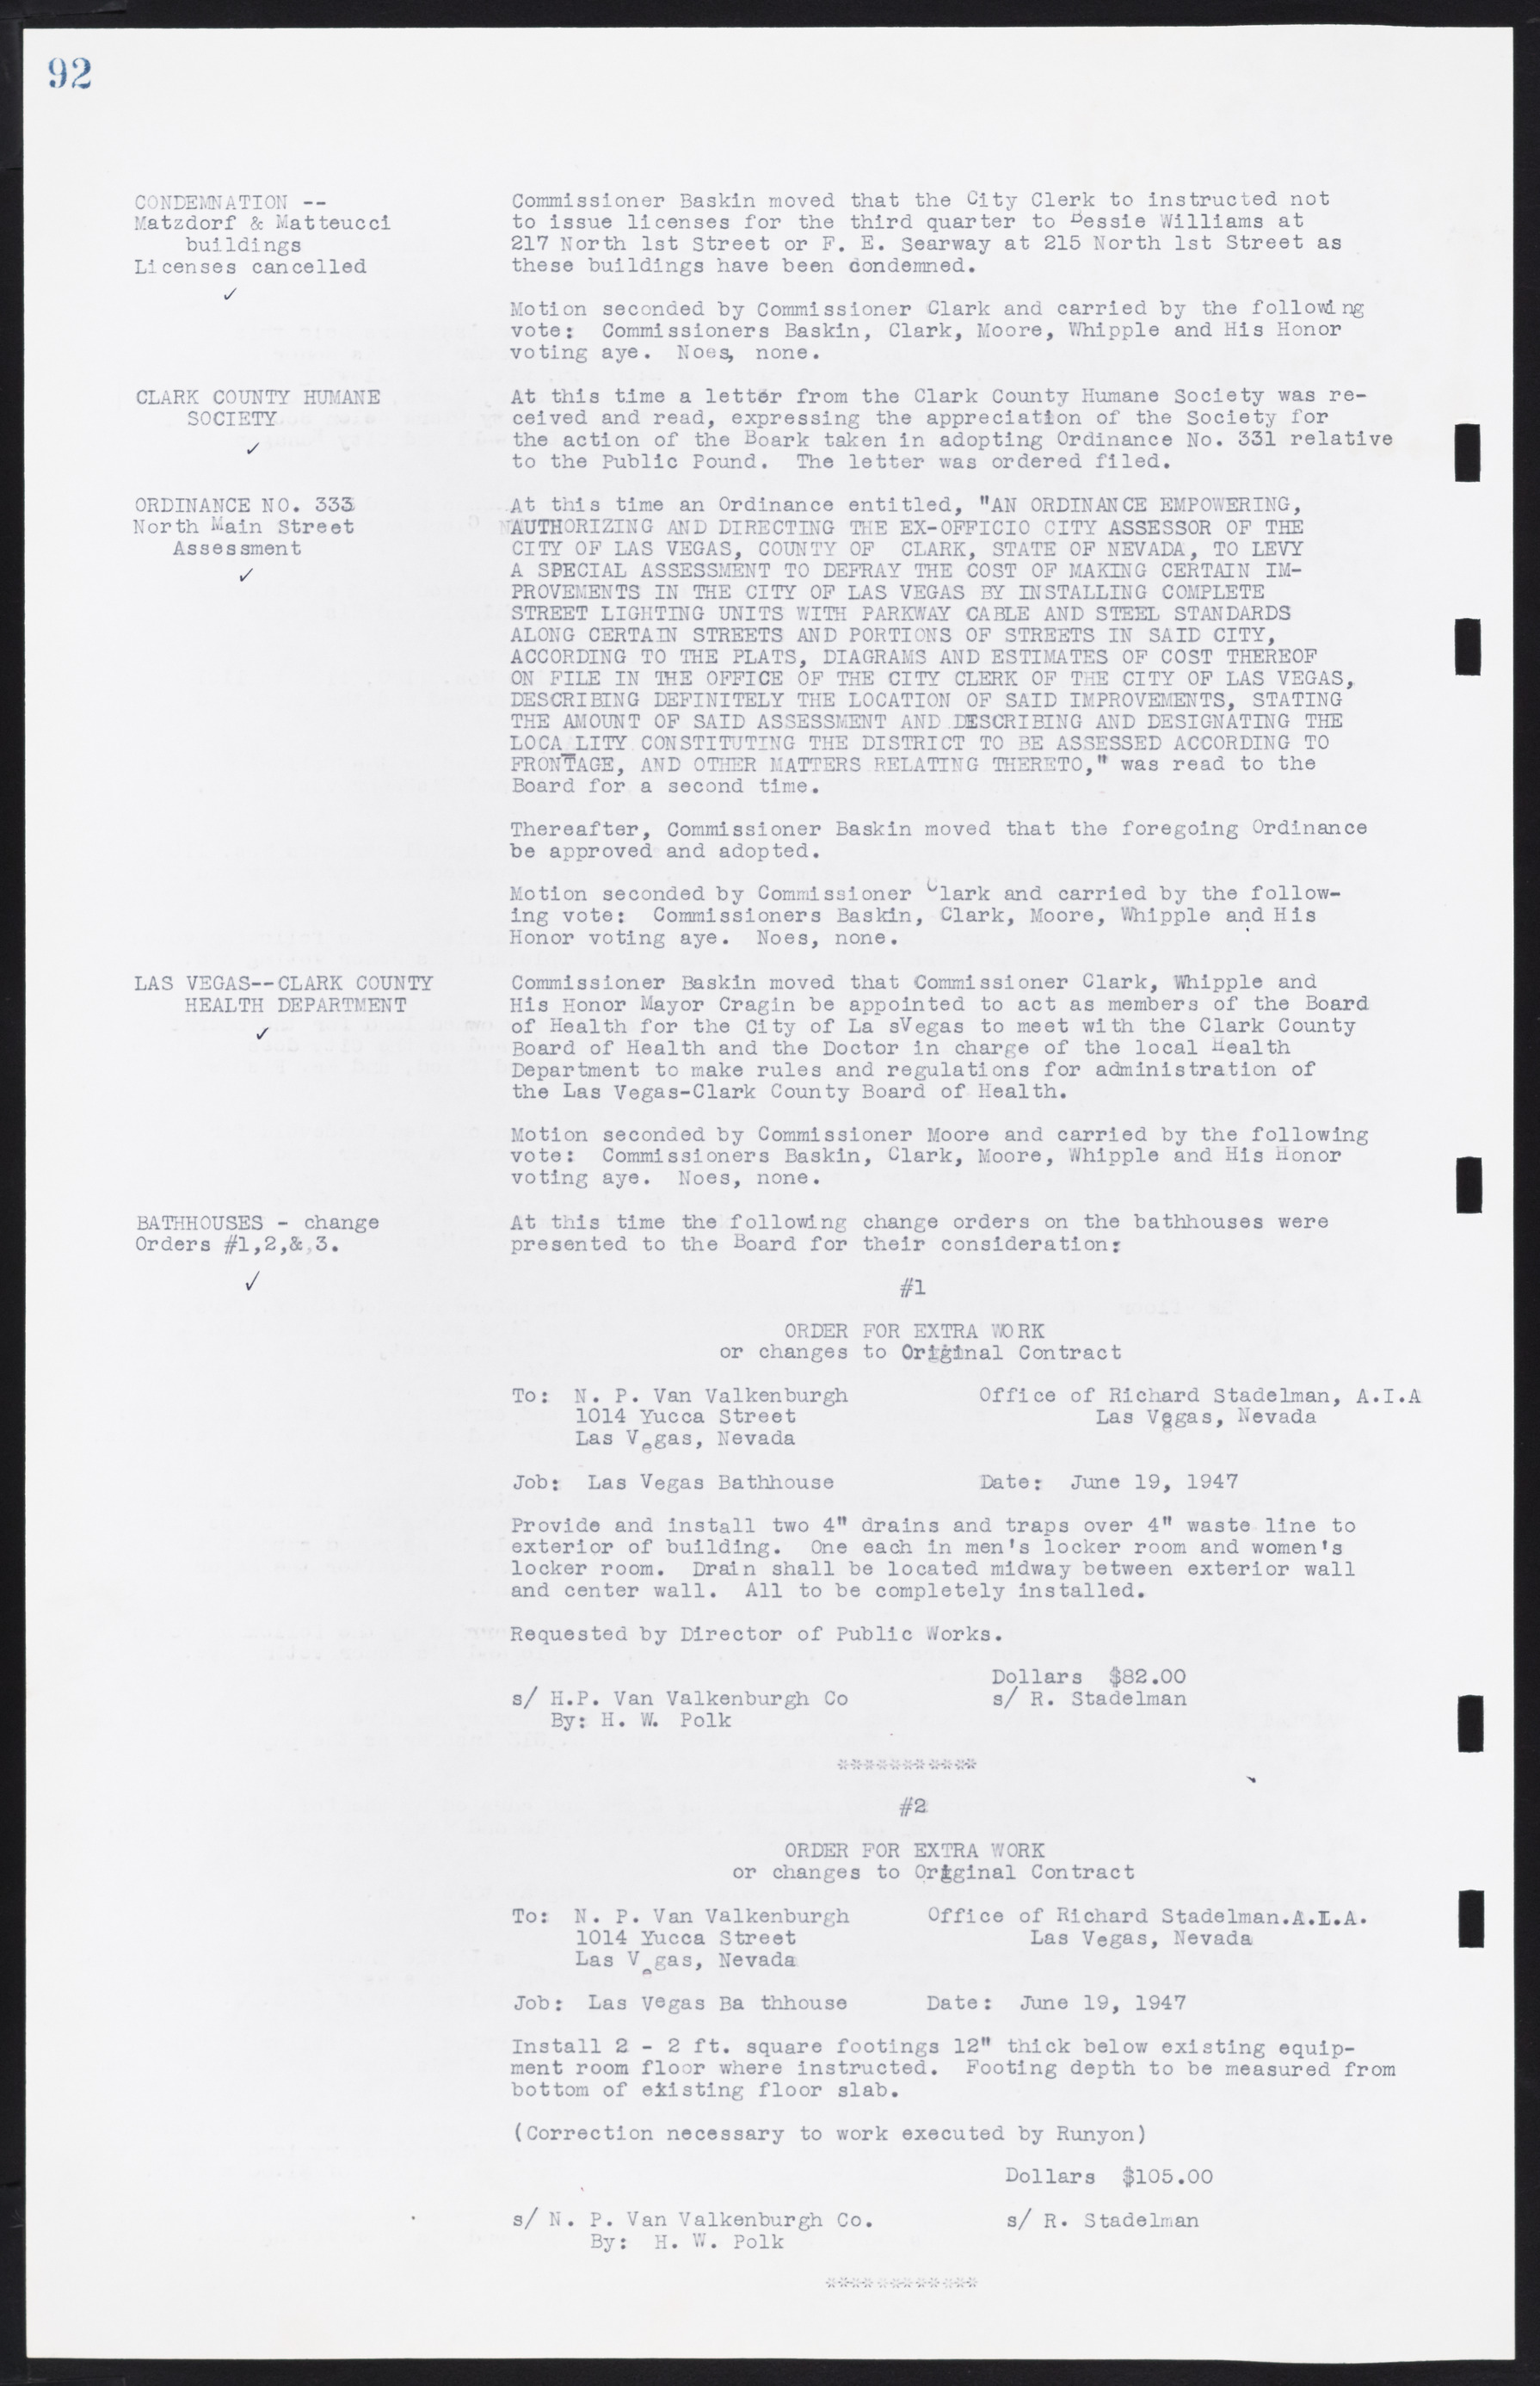 Las Vegas City Commission Minutes, January 7, 1947 to October 26, 1949, lvc000006-107